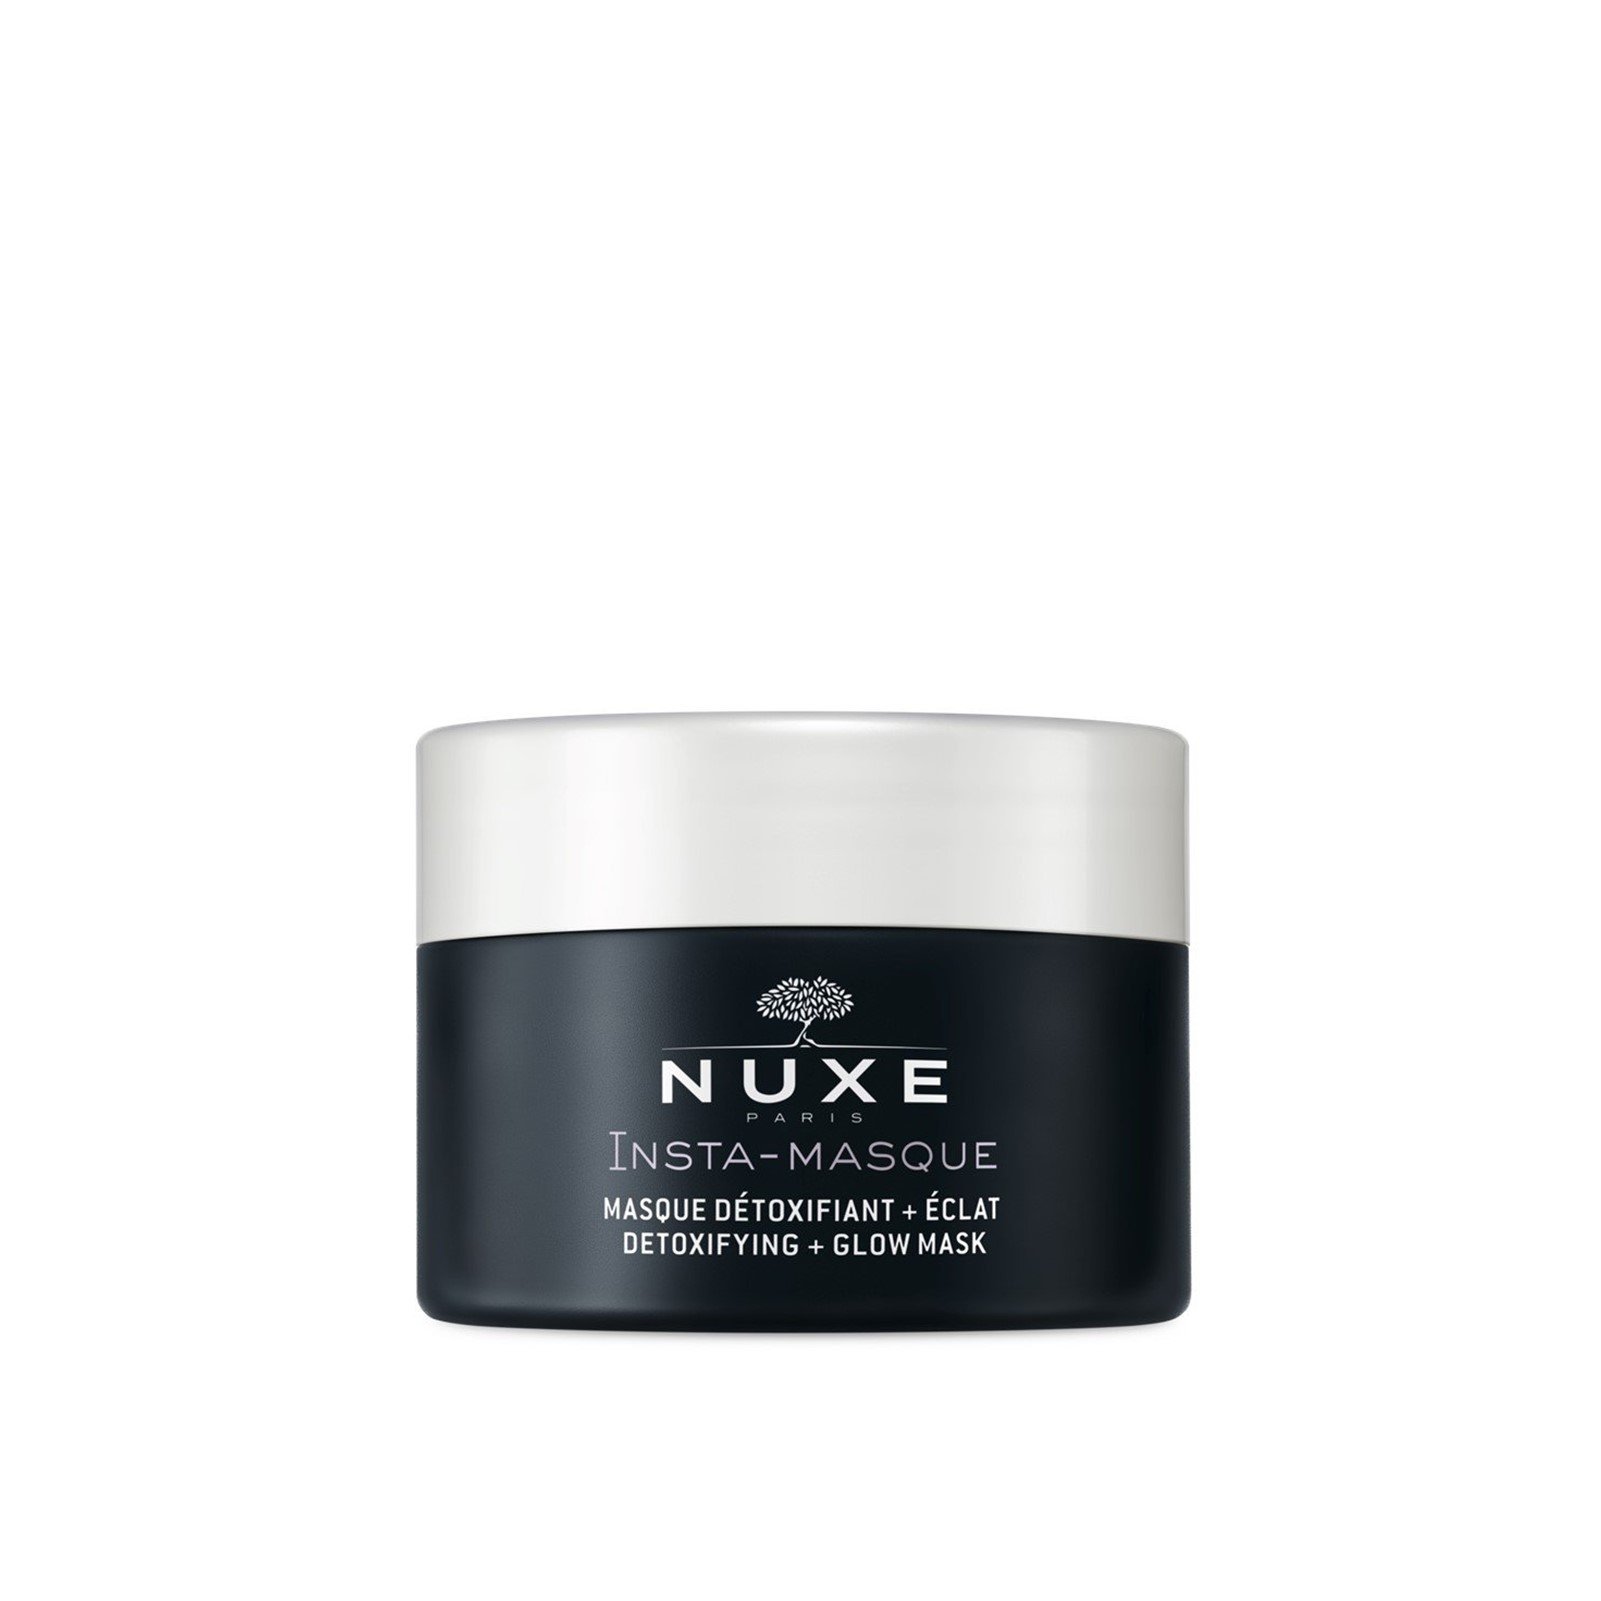 Buy NUXE Insta-Masque + Glow Mask 50ml (1.69fl USA